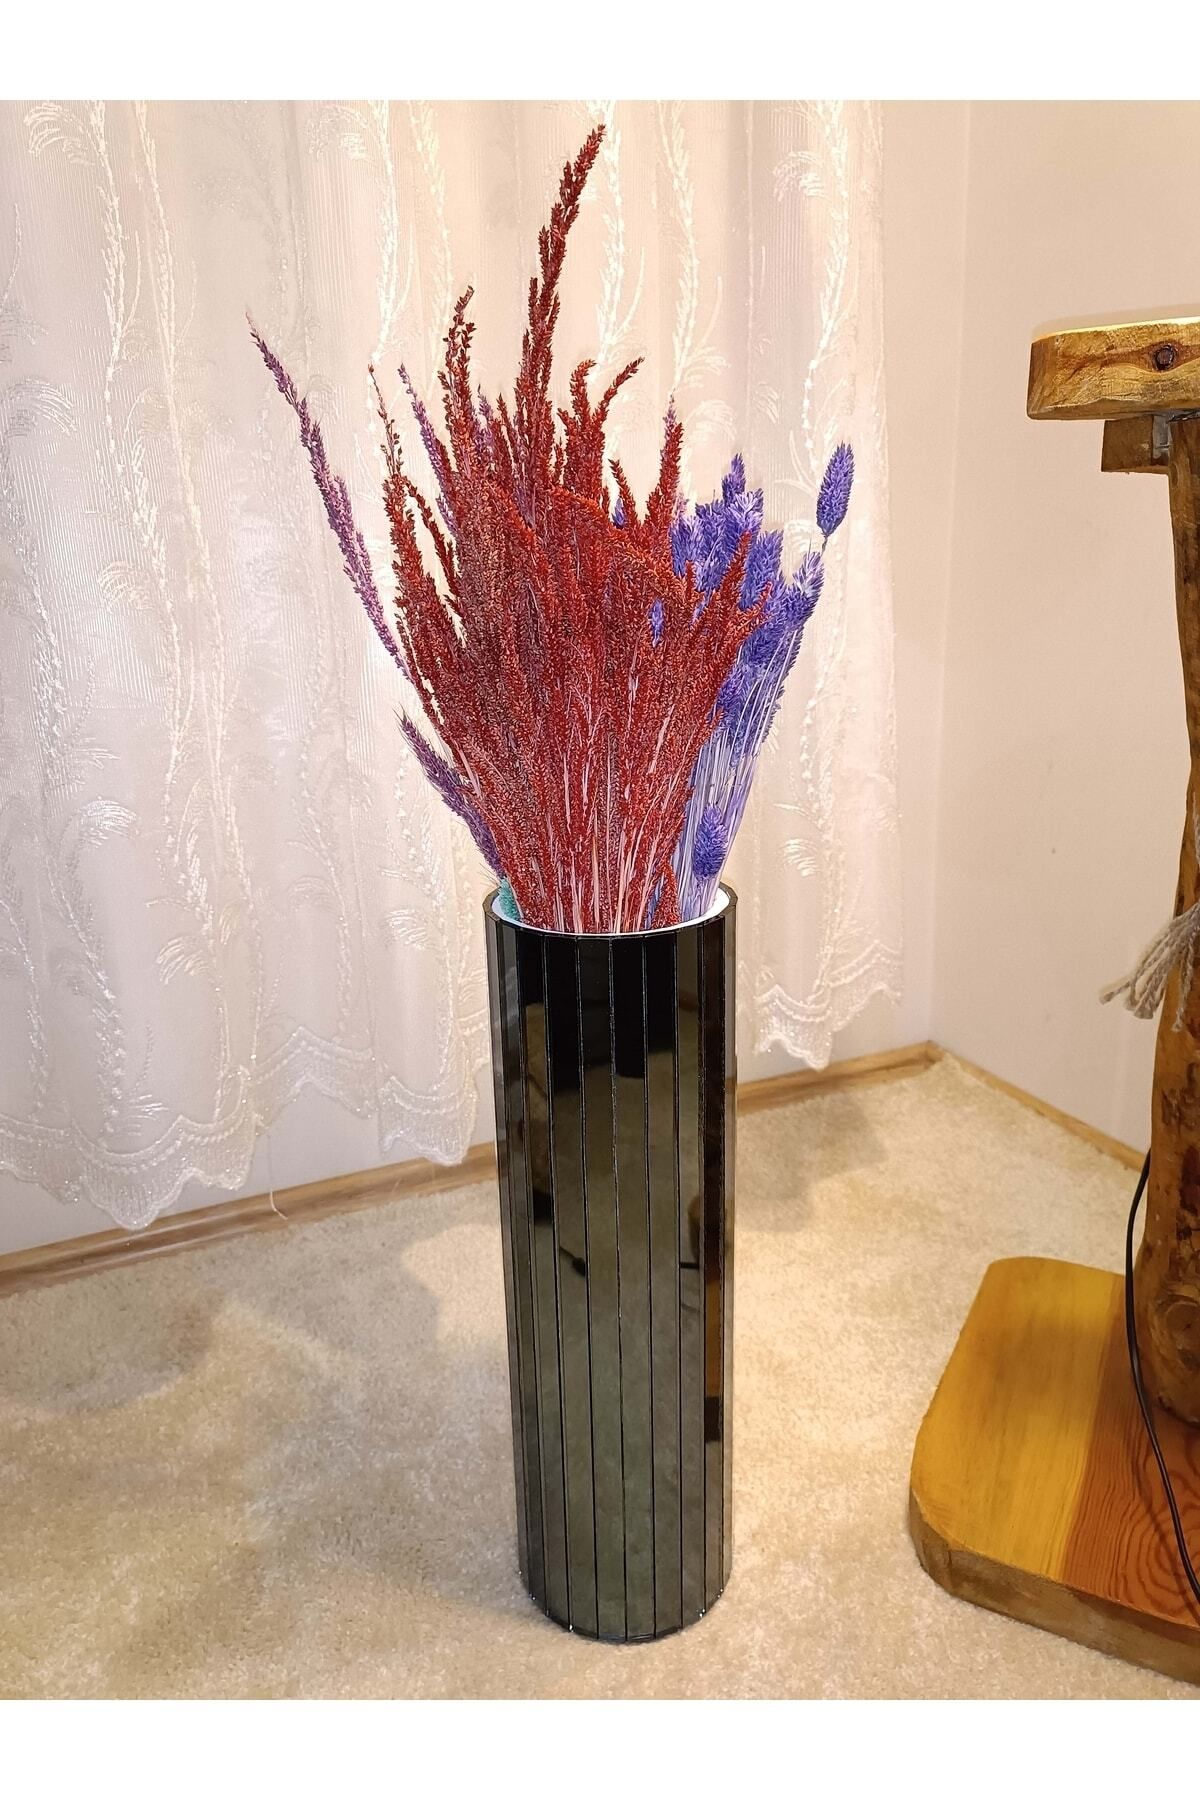 extrasepetim Aynalı Vazo Füme Şık Dekorasyon Yuvarlak 40cm Vazo